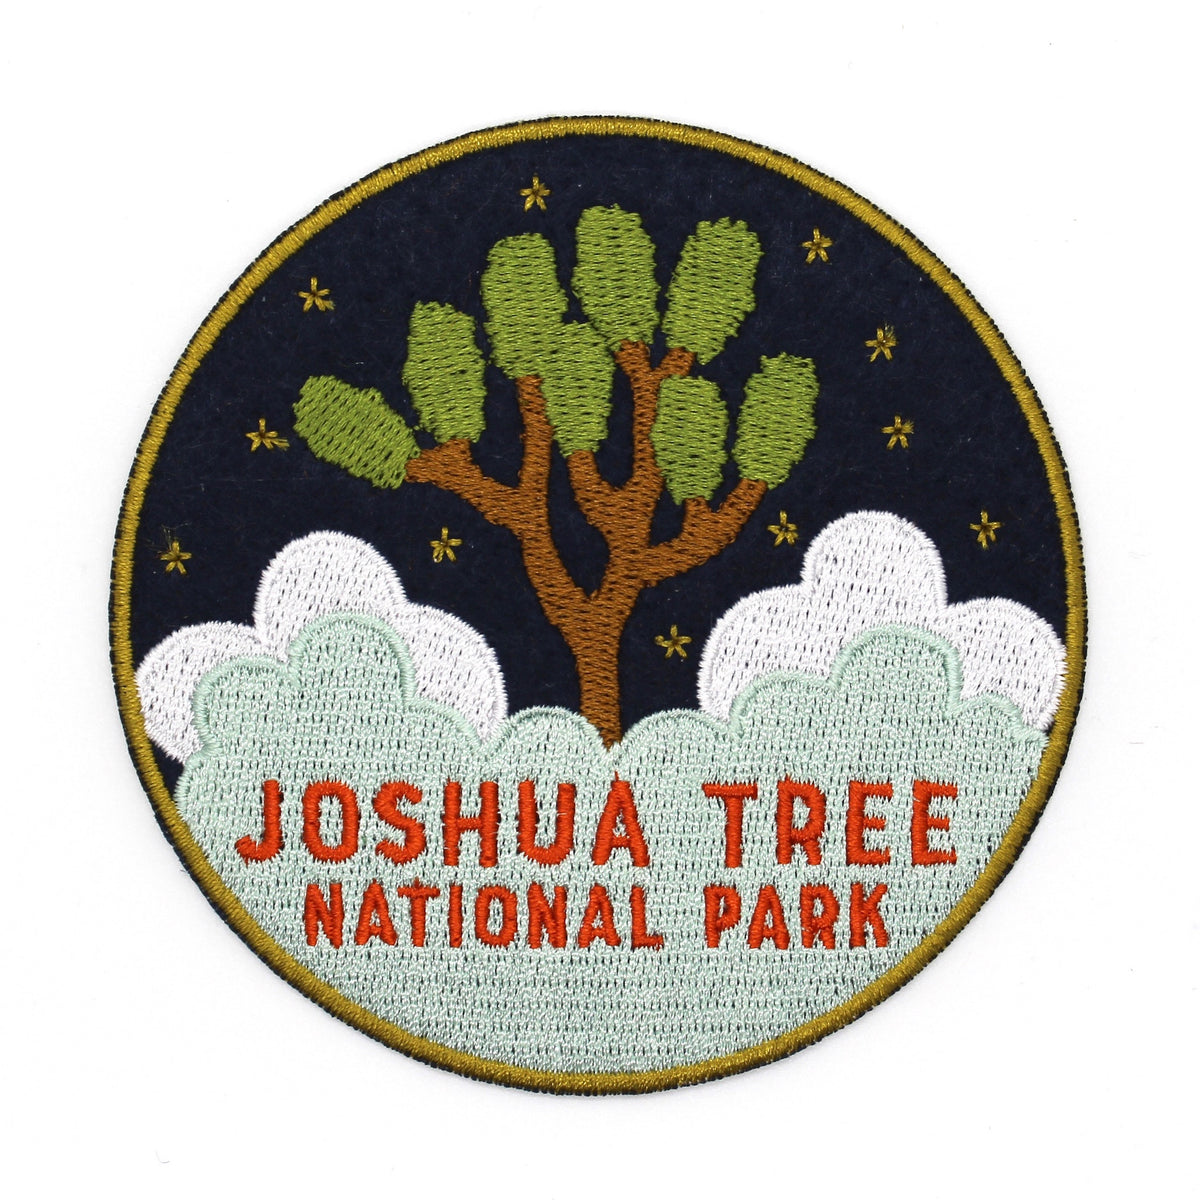 Joshua Tree National Park Patch